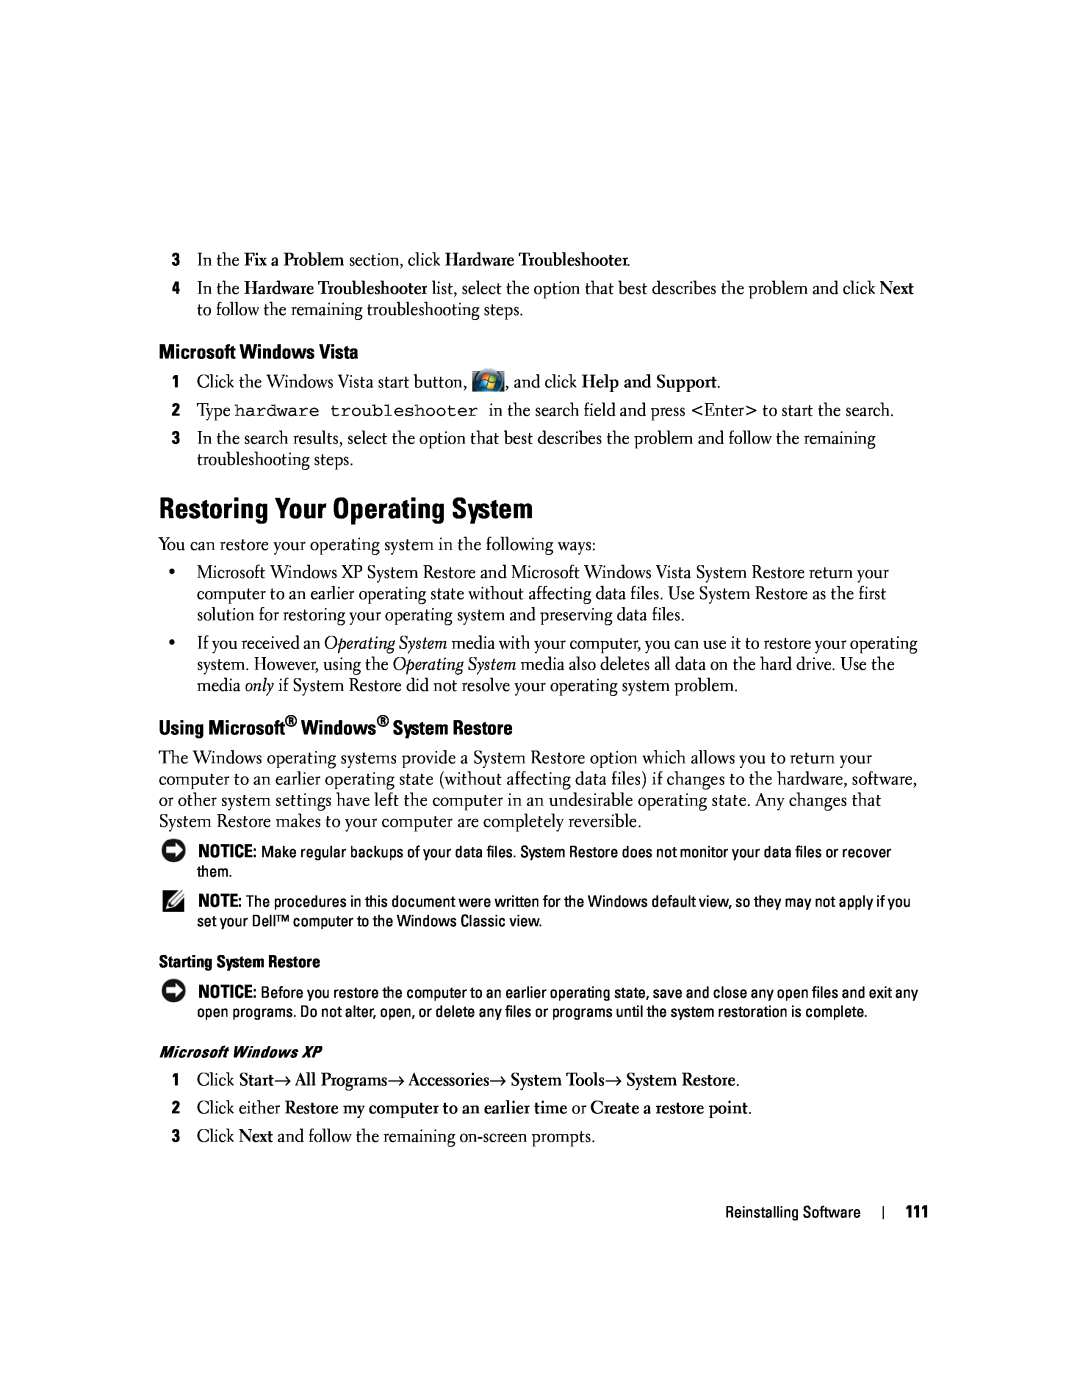 Dell PP24L manual Restoring Your Operating System, Microsoft Windows Vista, Using Microsoft Windows System Restore 